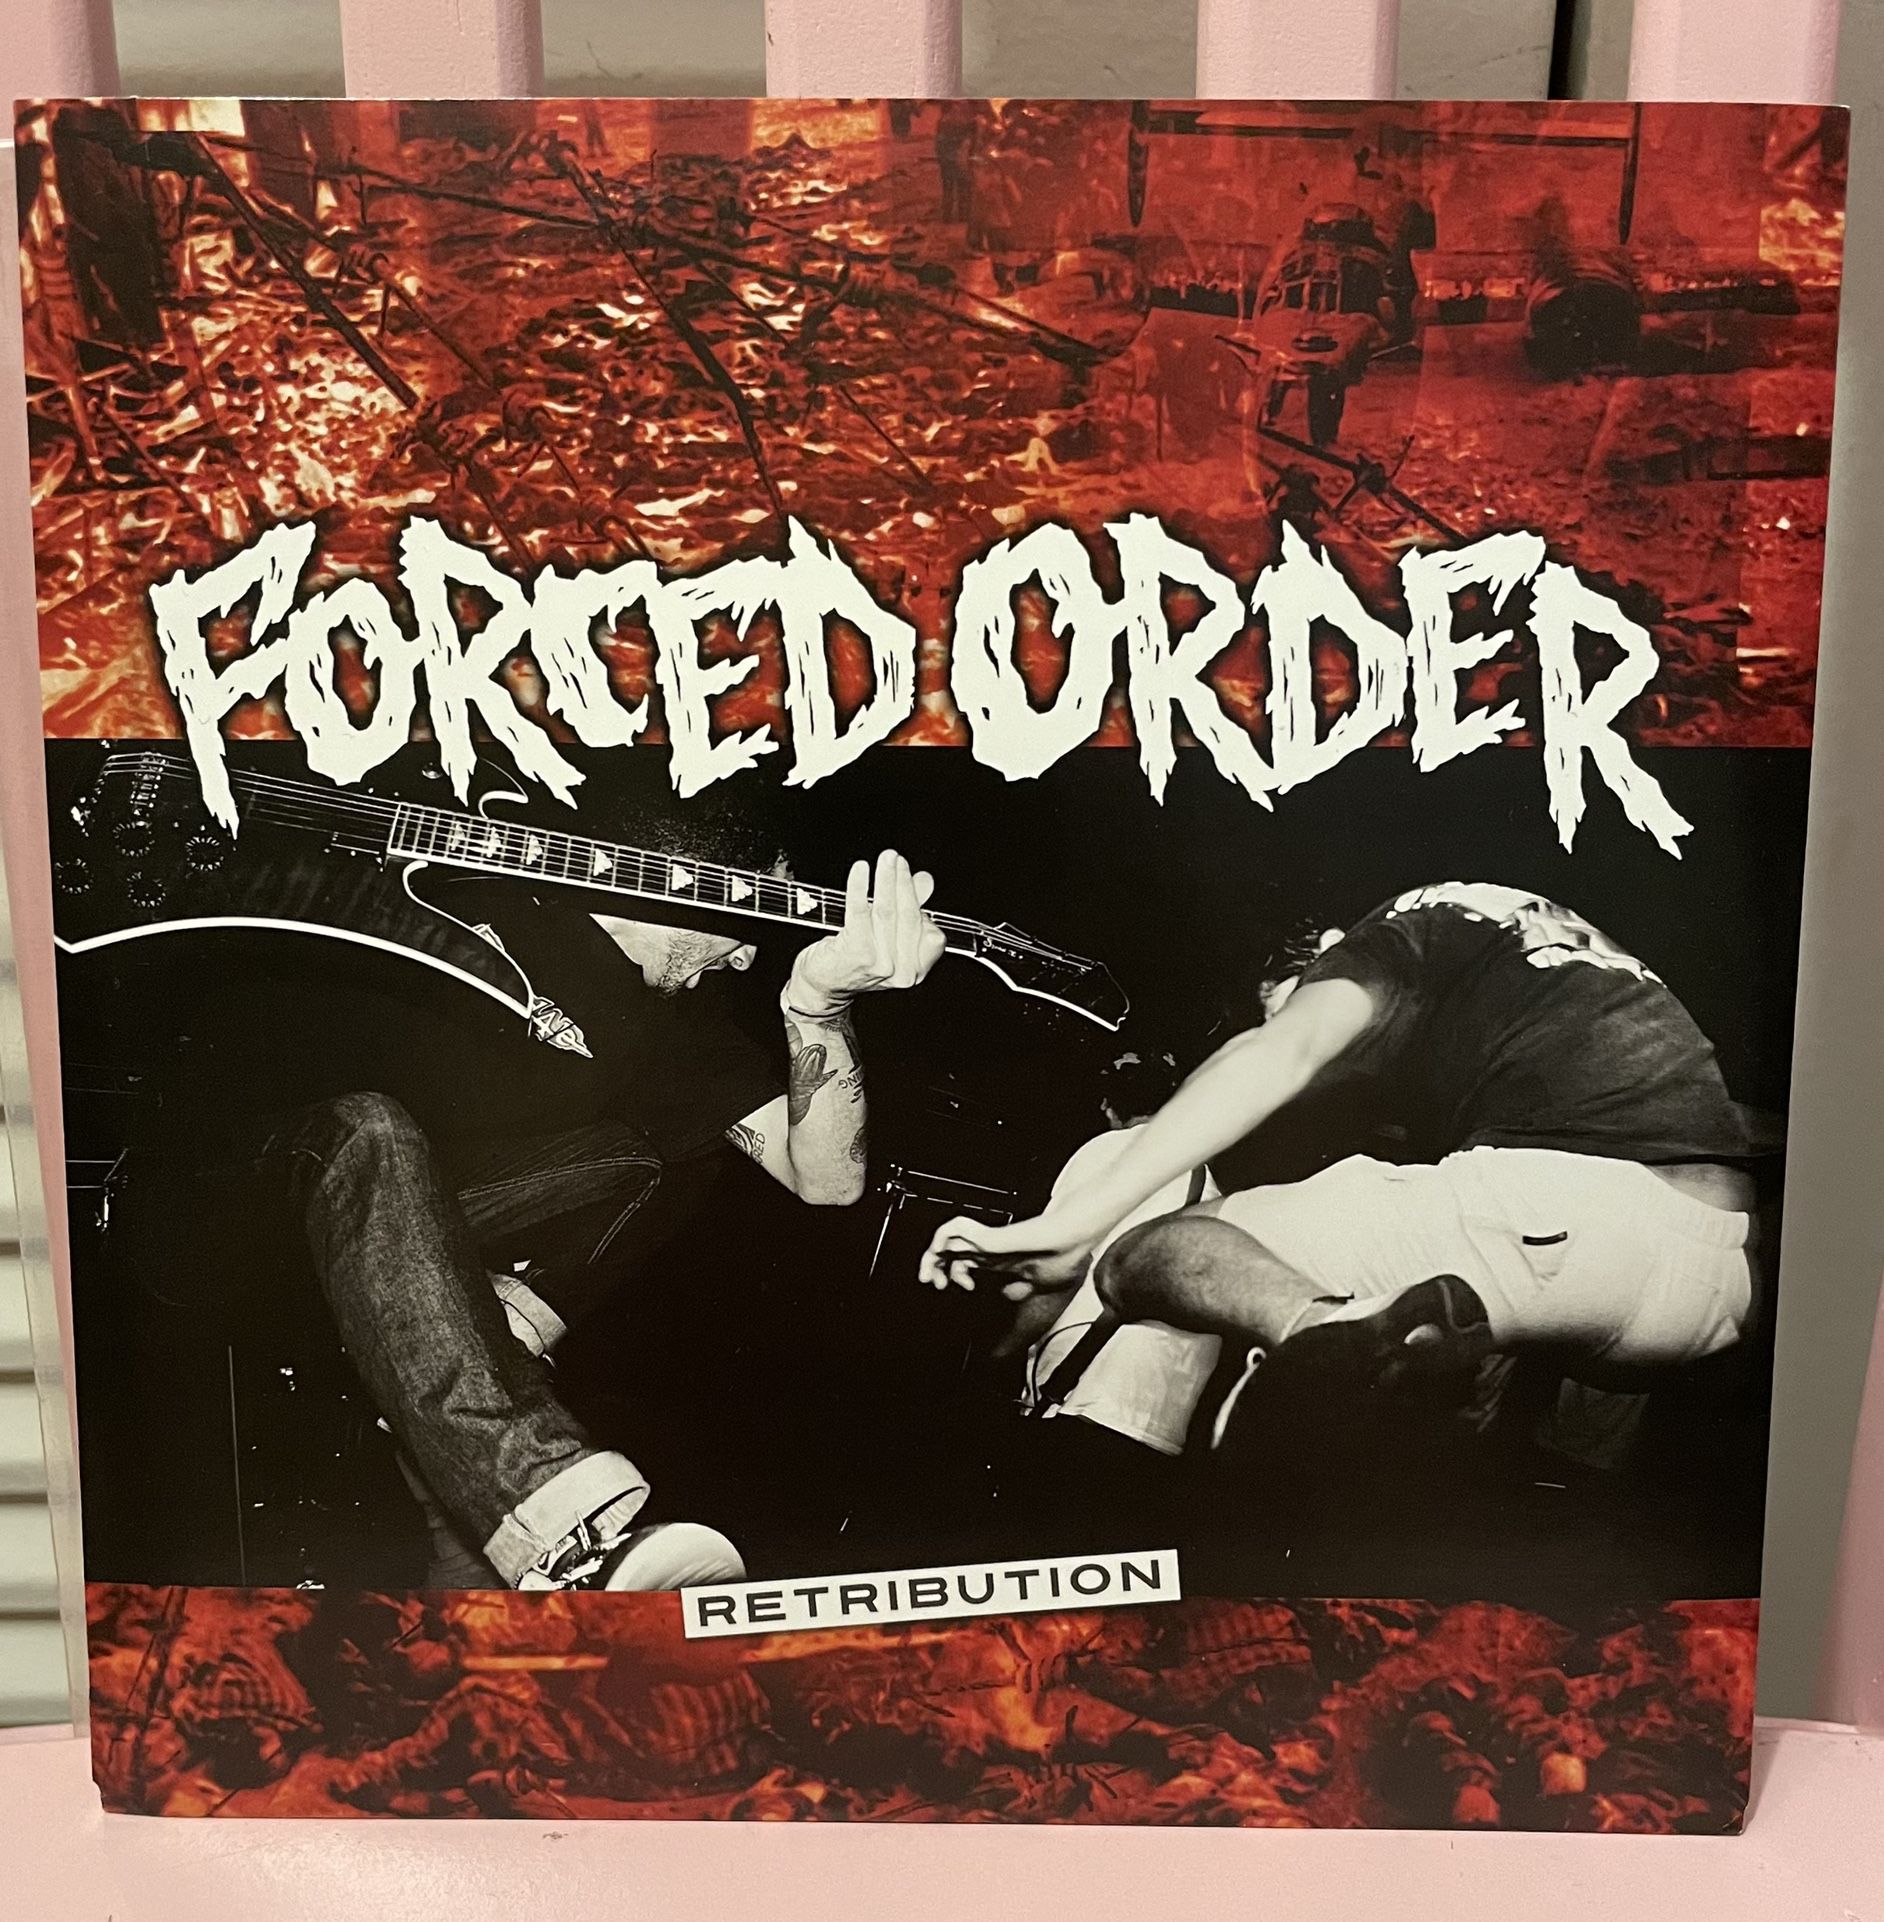 Forced Order - Retribution 7" vinyl record